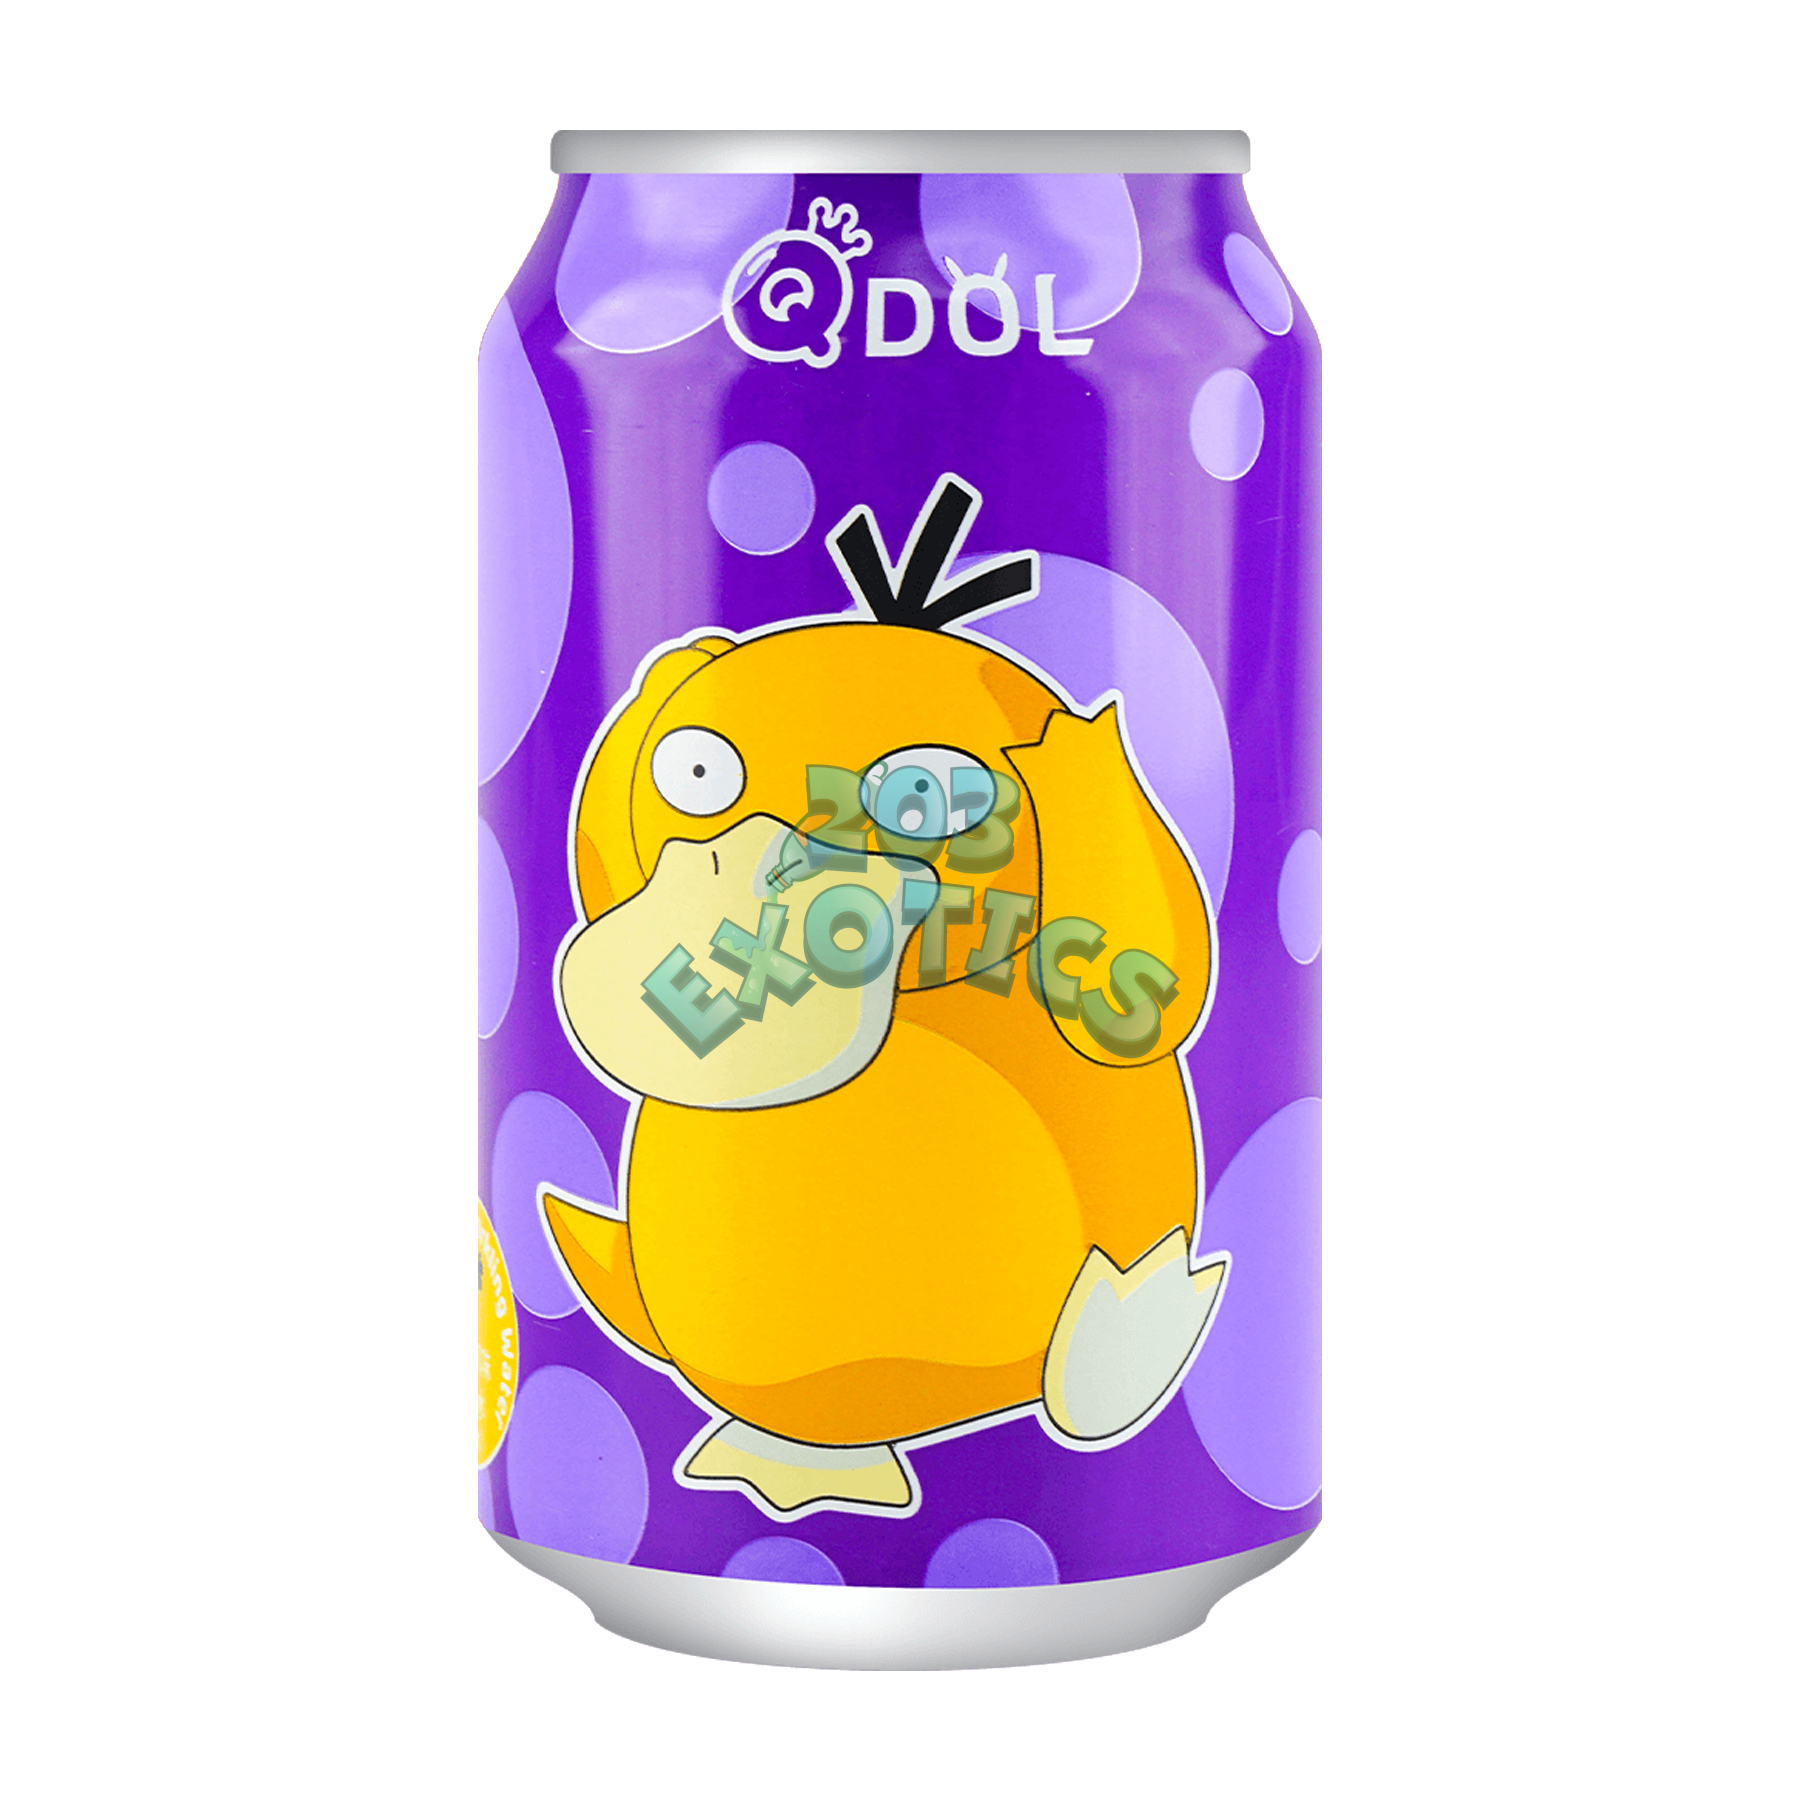 Qdol Pokemon Sparkling Water Psyduck Grape Flavored (11.16 Fl Oz)